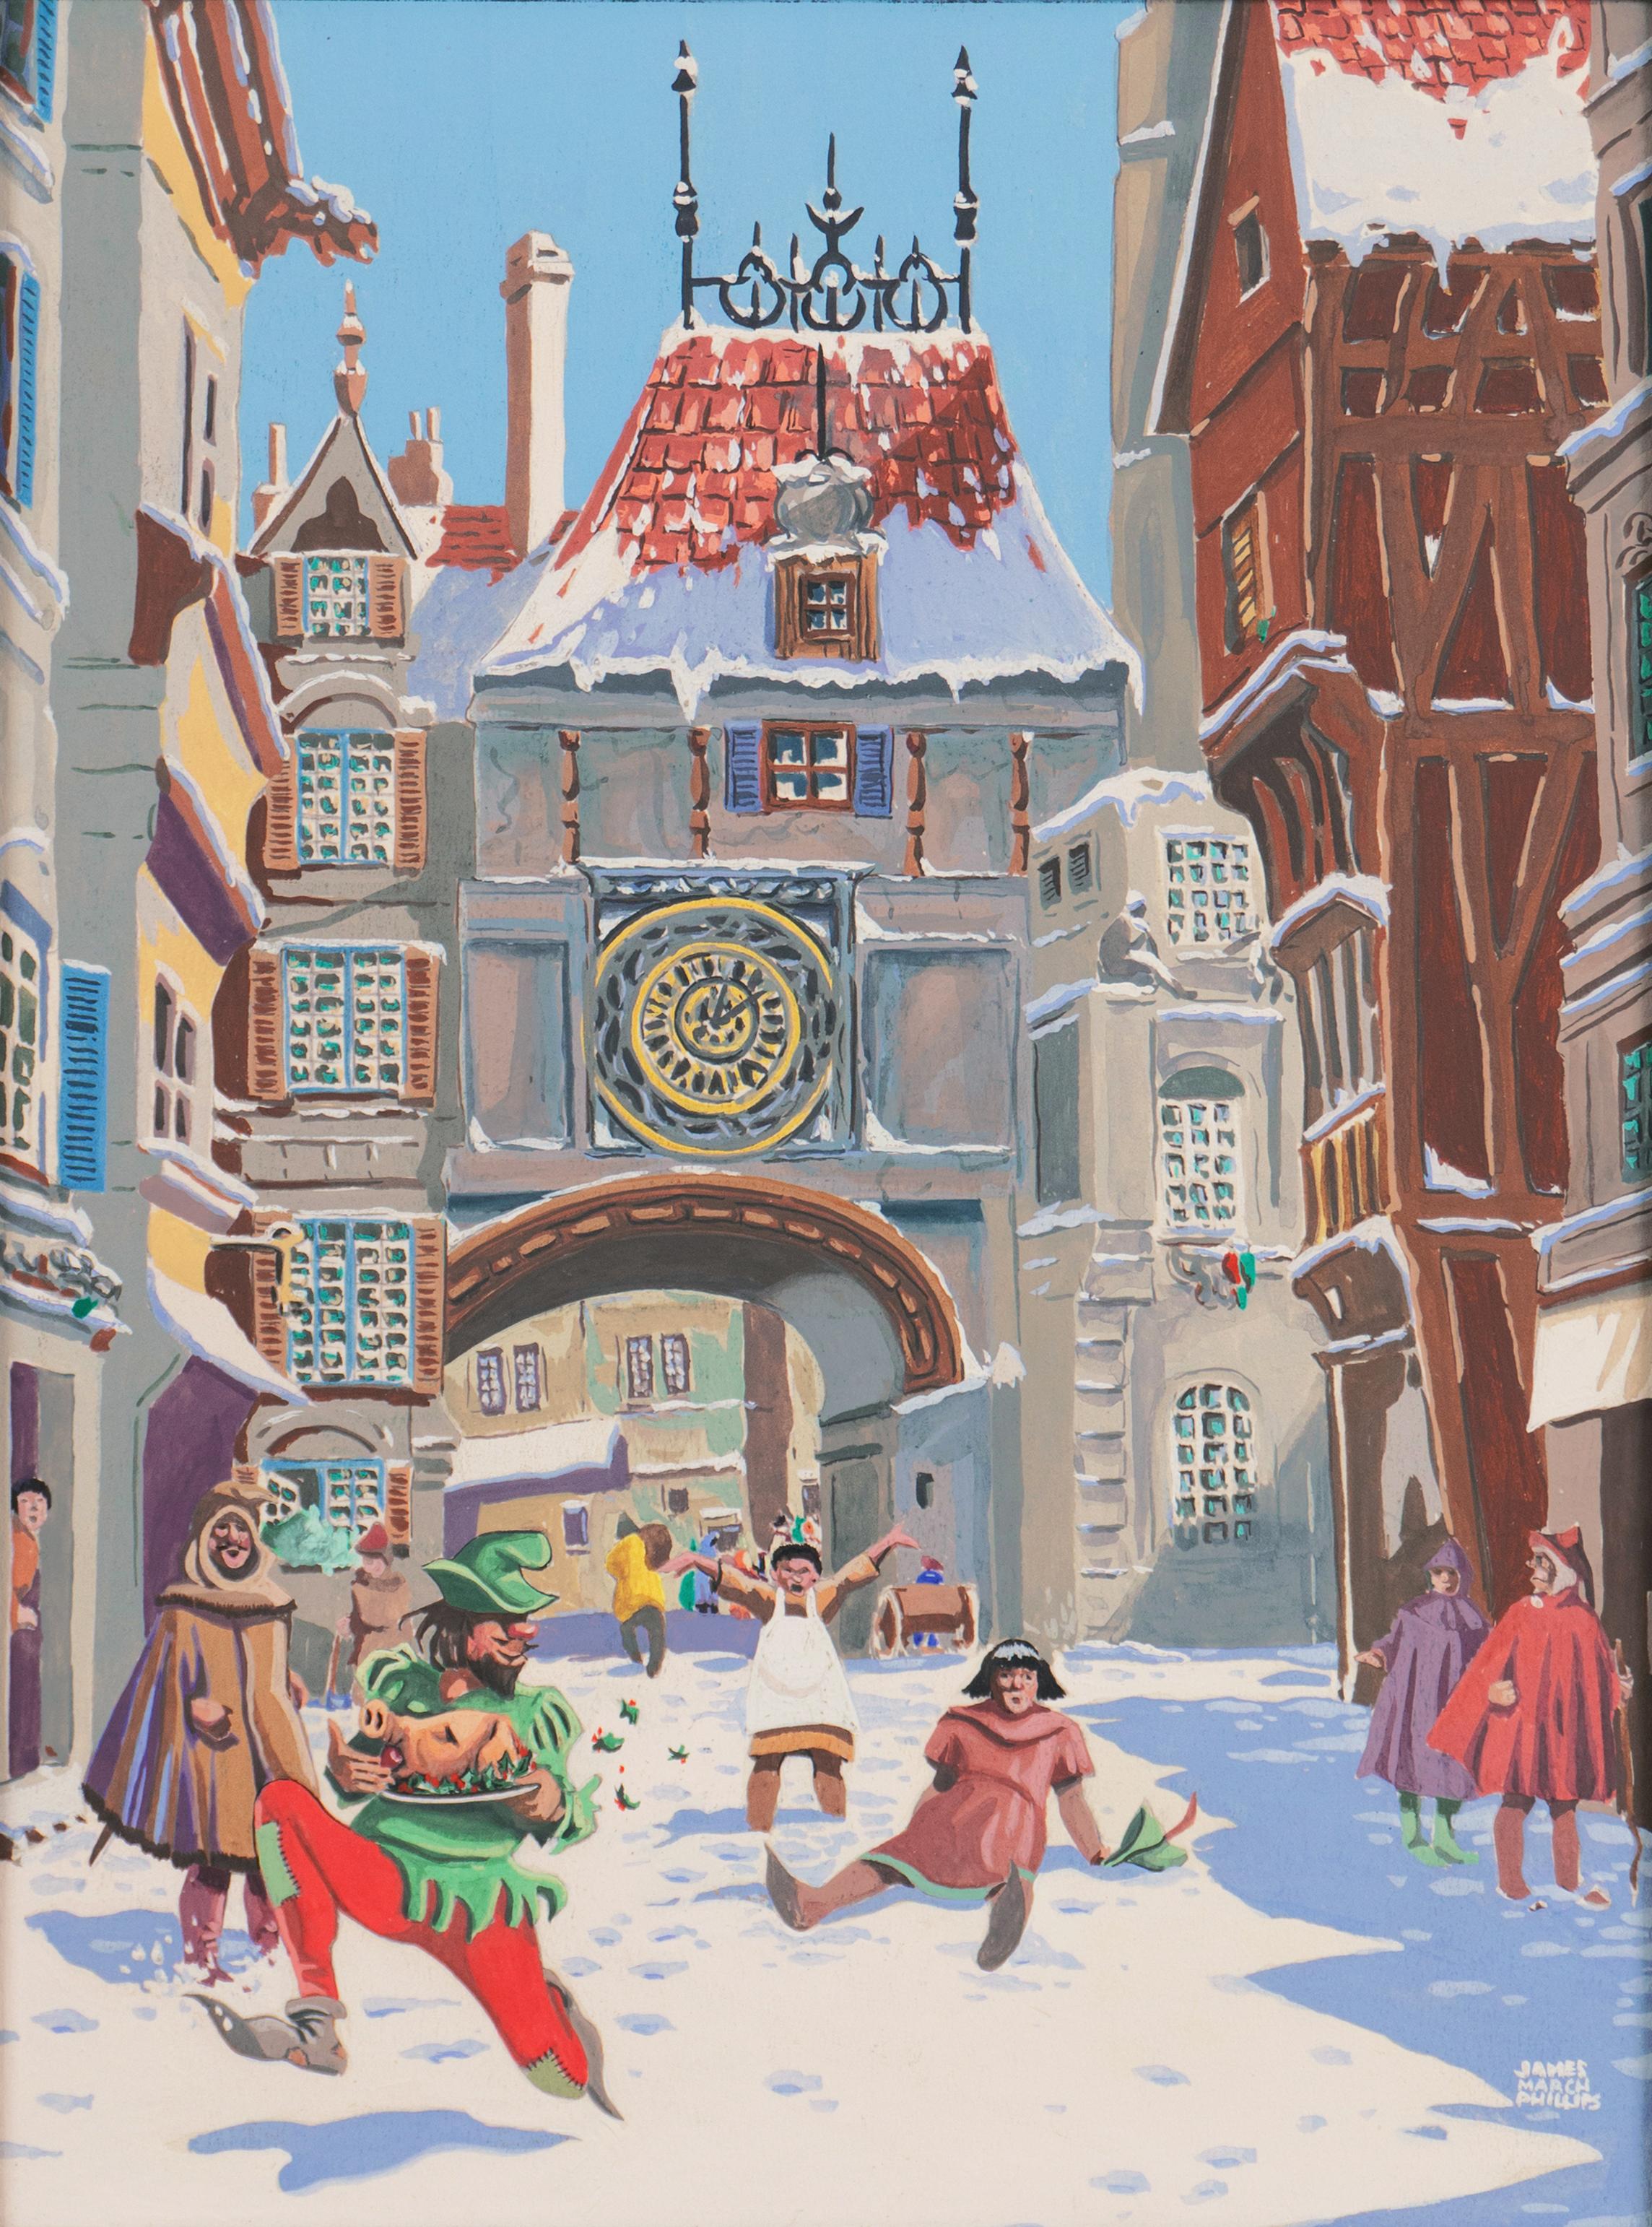 'The Thief from François Villon's Christmas', San Francisco Bay Area Illustrator